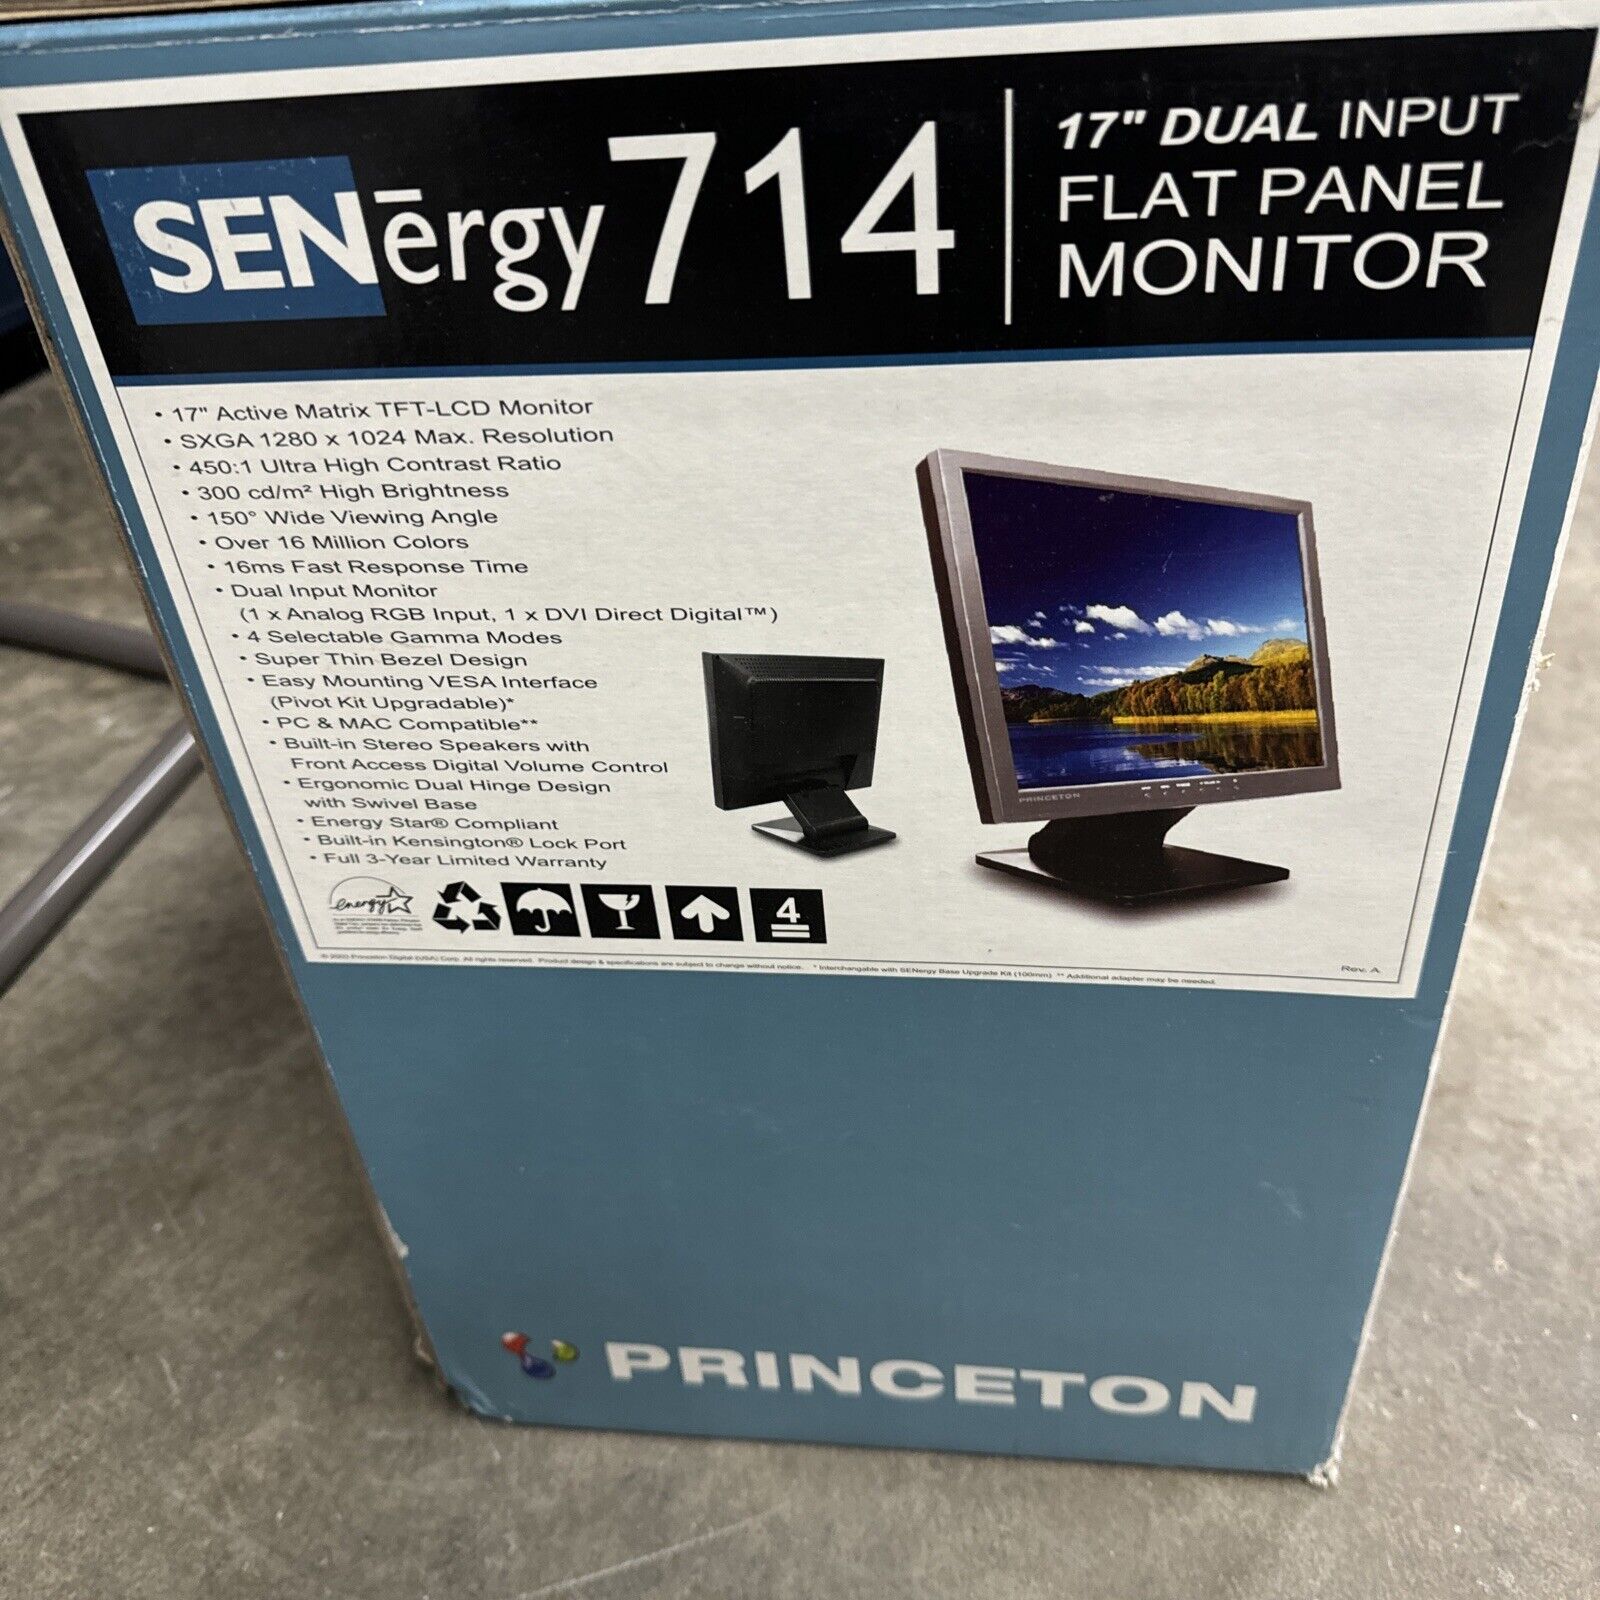 Princeton SENergy 714 17” Dual Input Flat Panel Computer Monitor From 2004